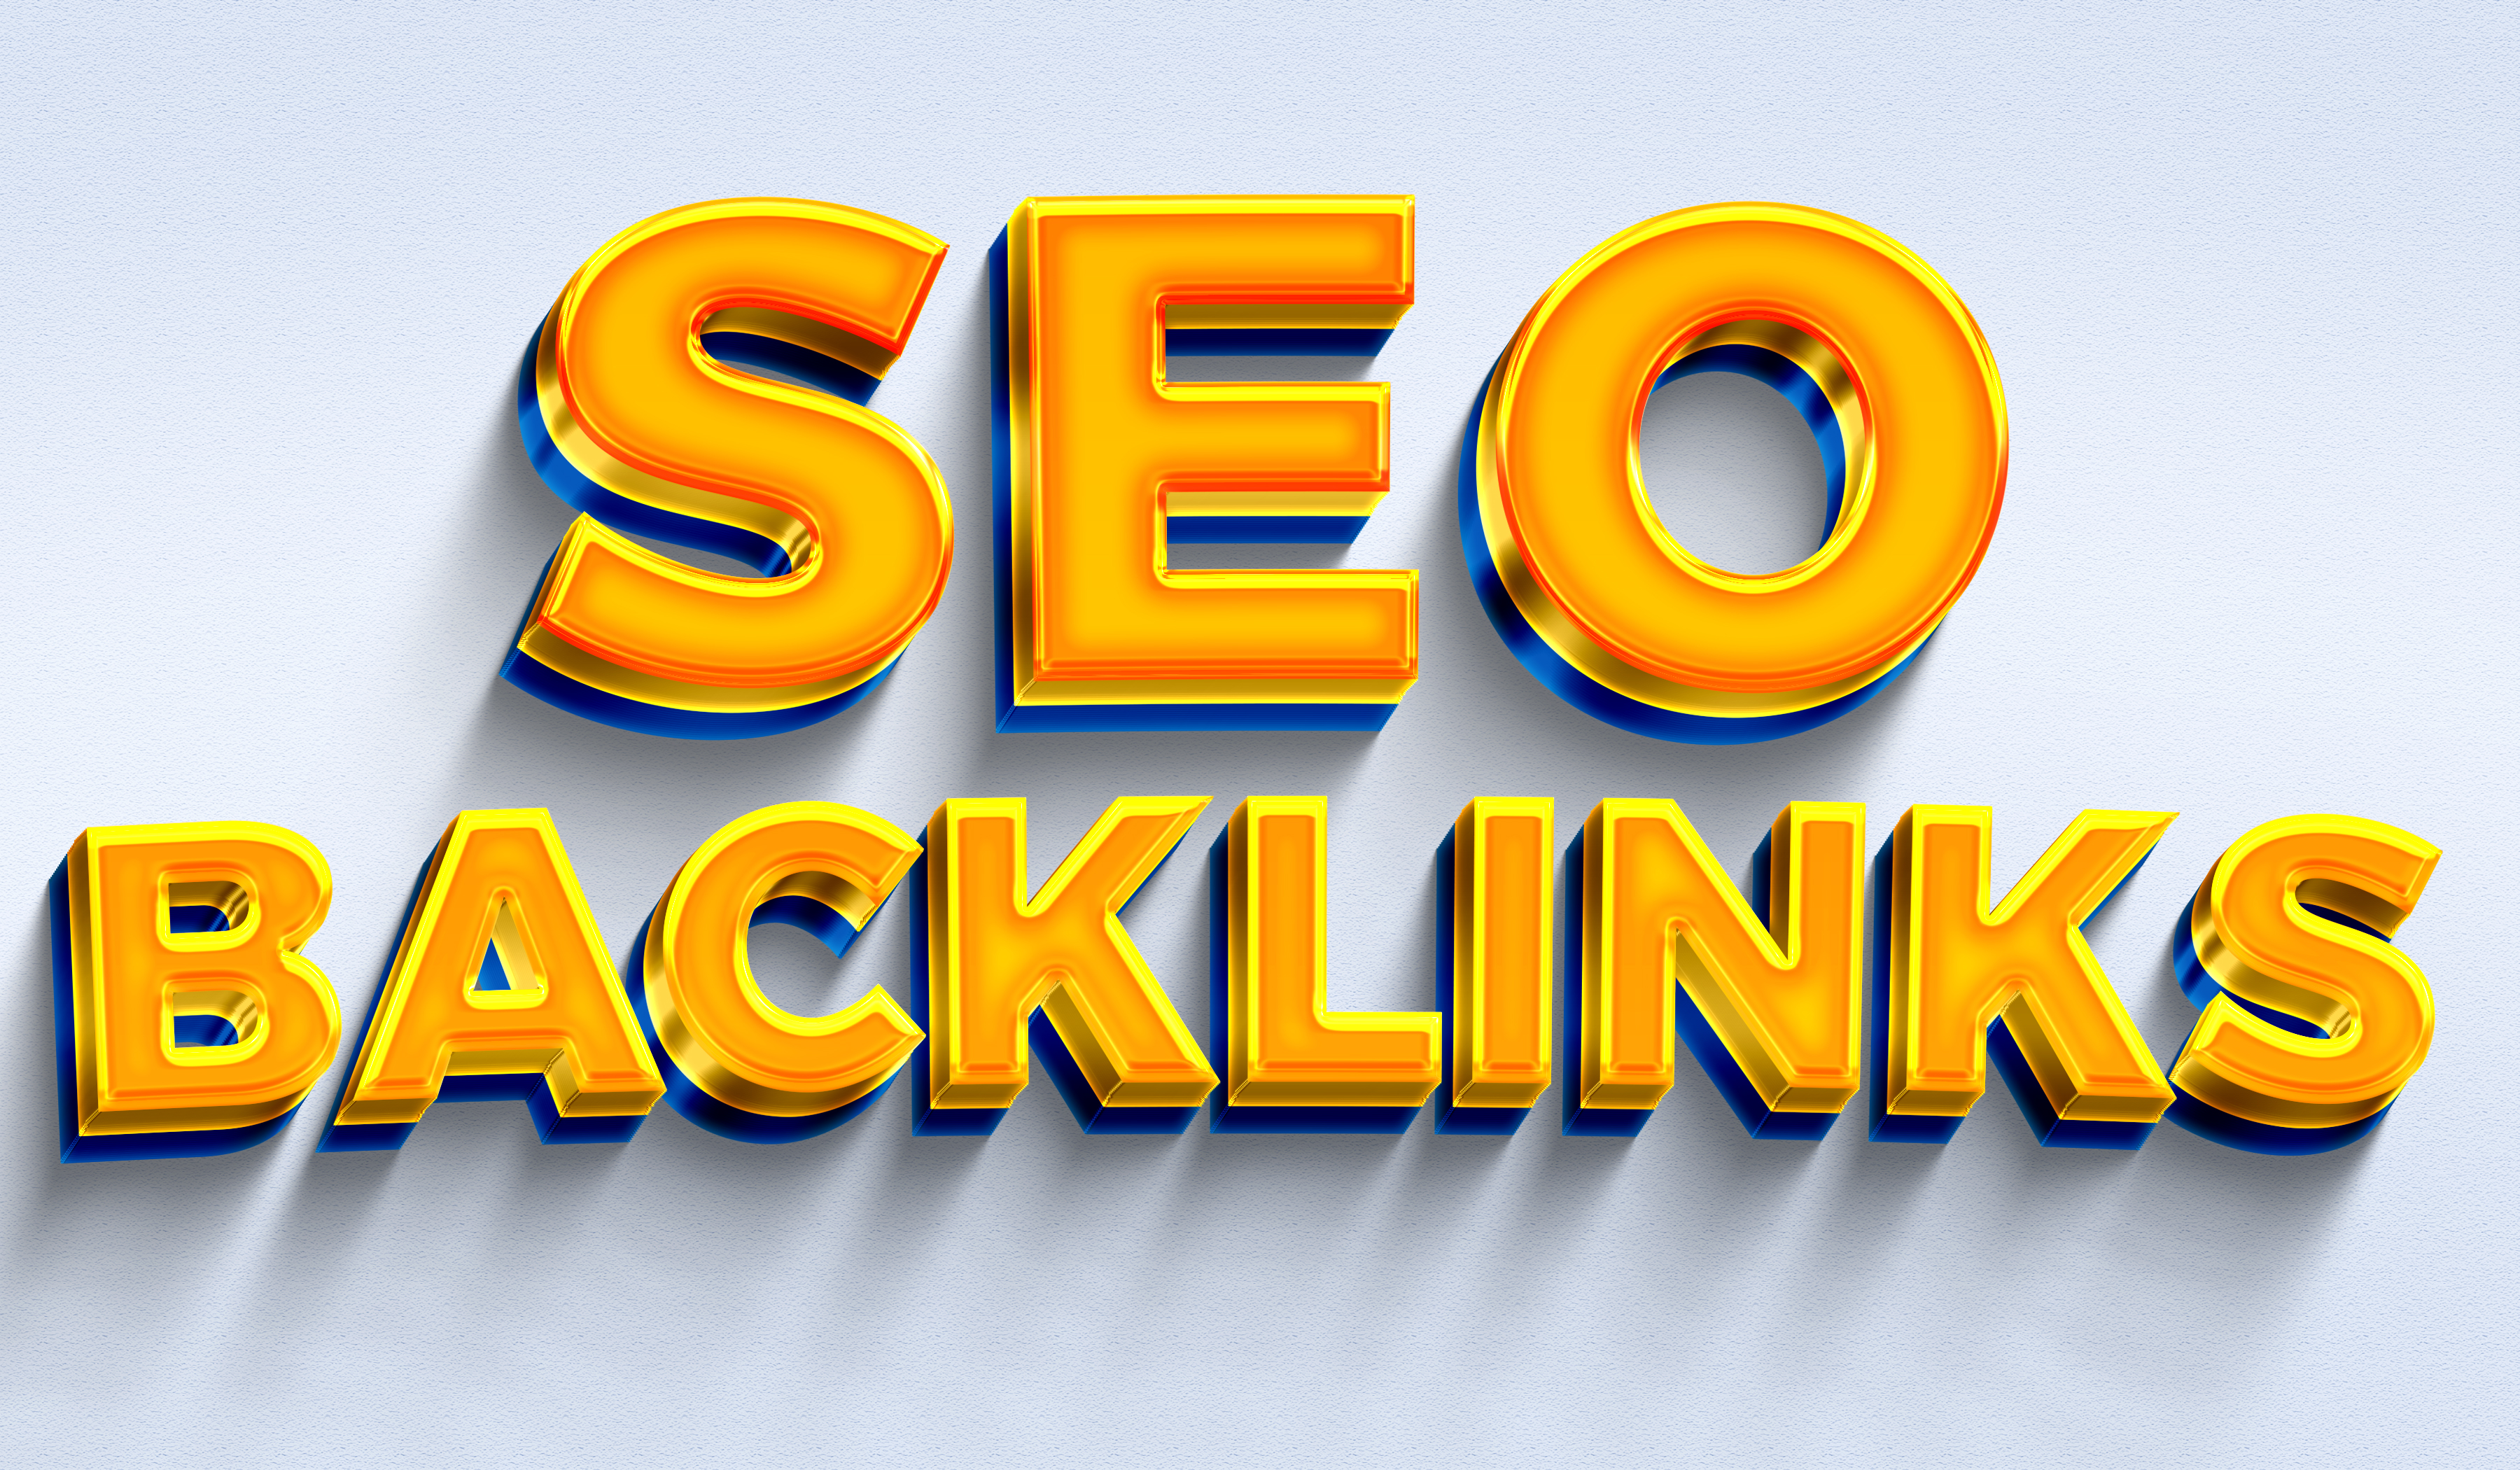 850 Manual | Web 2.0 Backlinks | Dofollow Backlinks | Contextual | SEO Backlinks